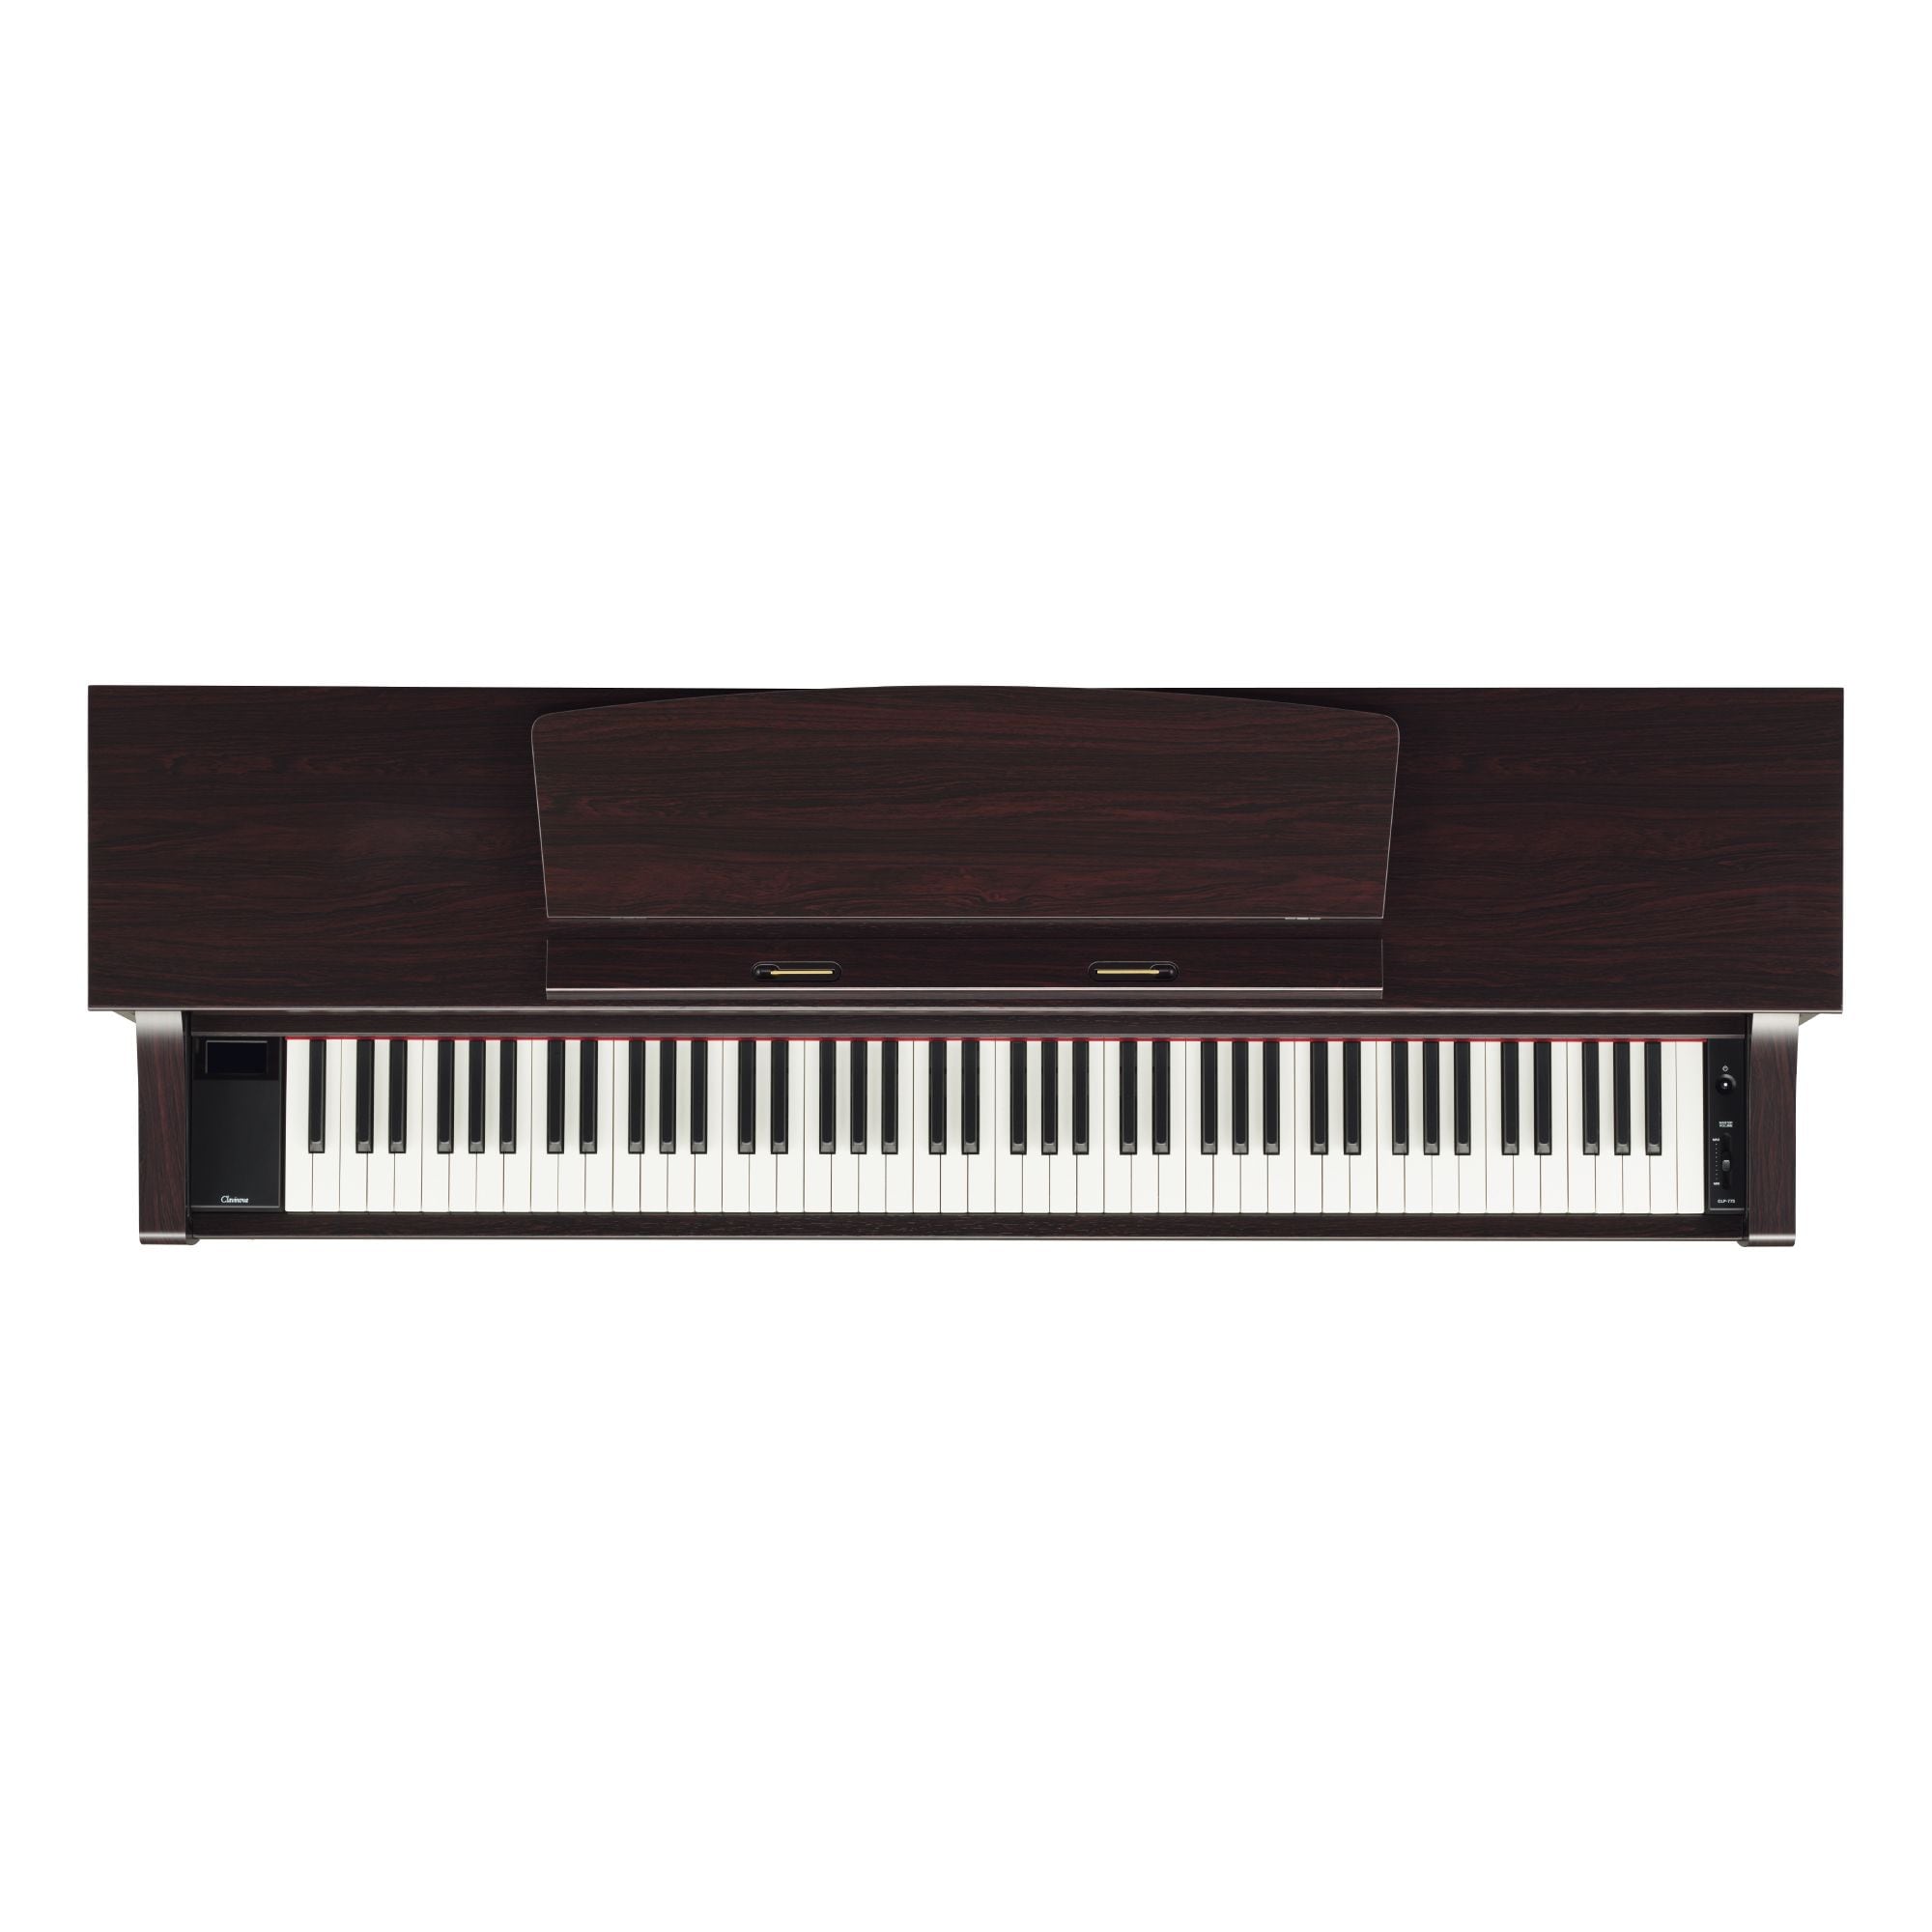 CLP-775 - Overview - Clavinova - Pianos - Musical Instruments 